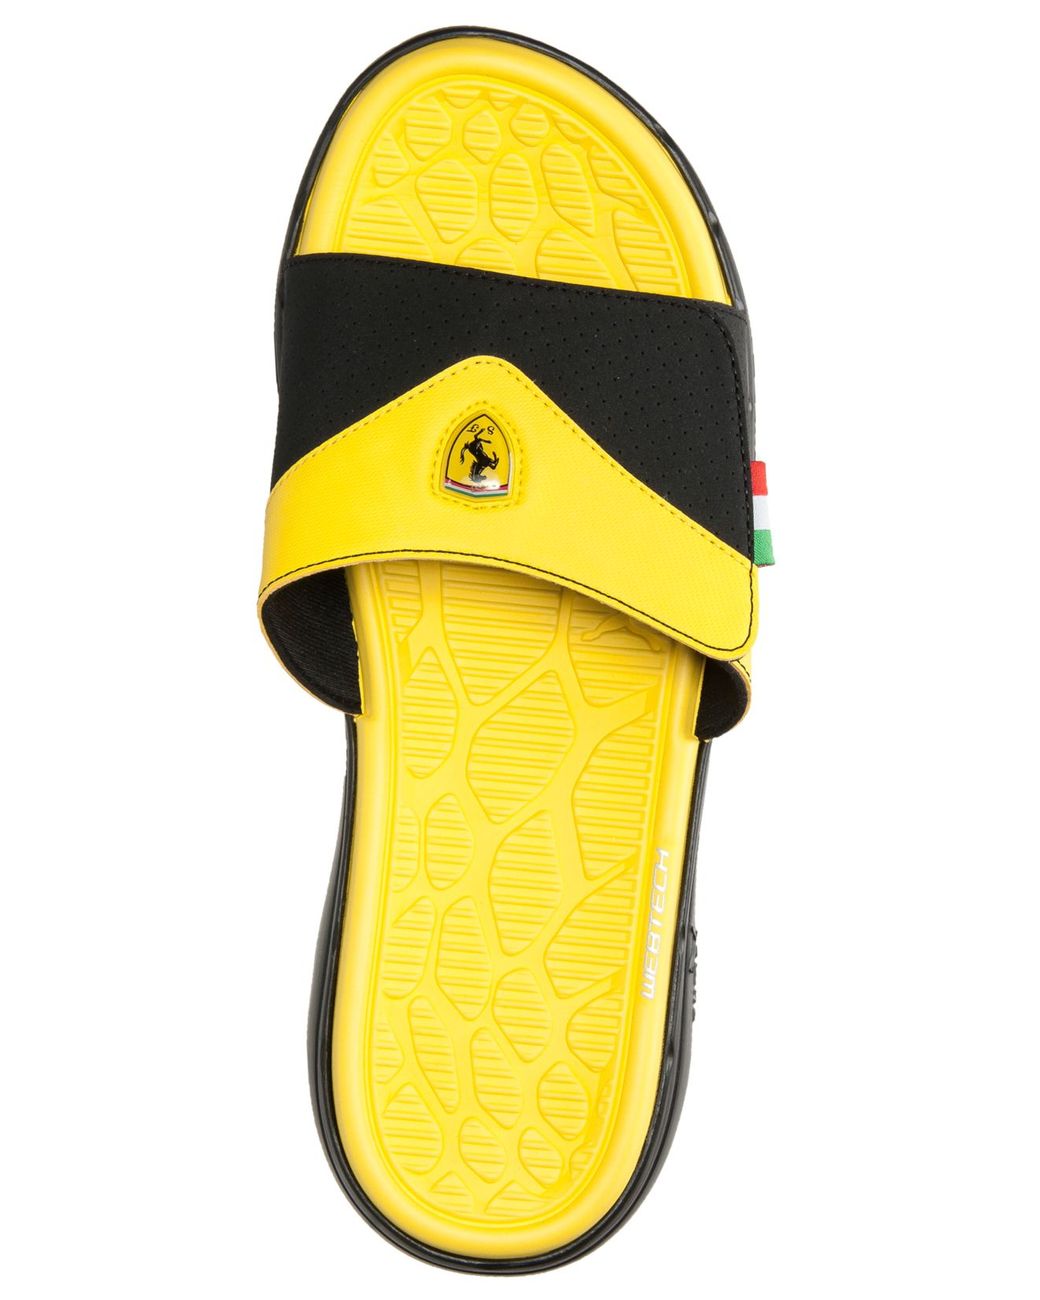 PUMA Men'S Ferrari Slide Sandals From Finish Line in Black Yellow (Yellow)  for Men | Lyst